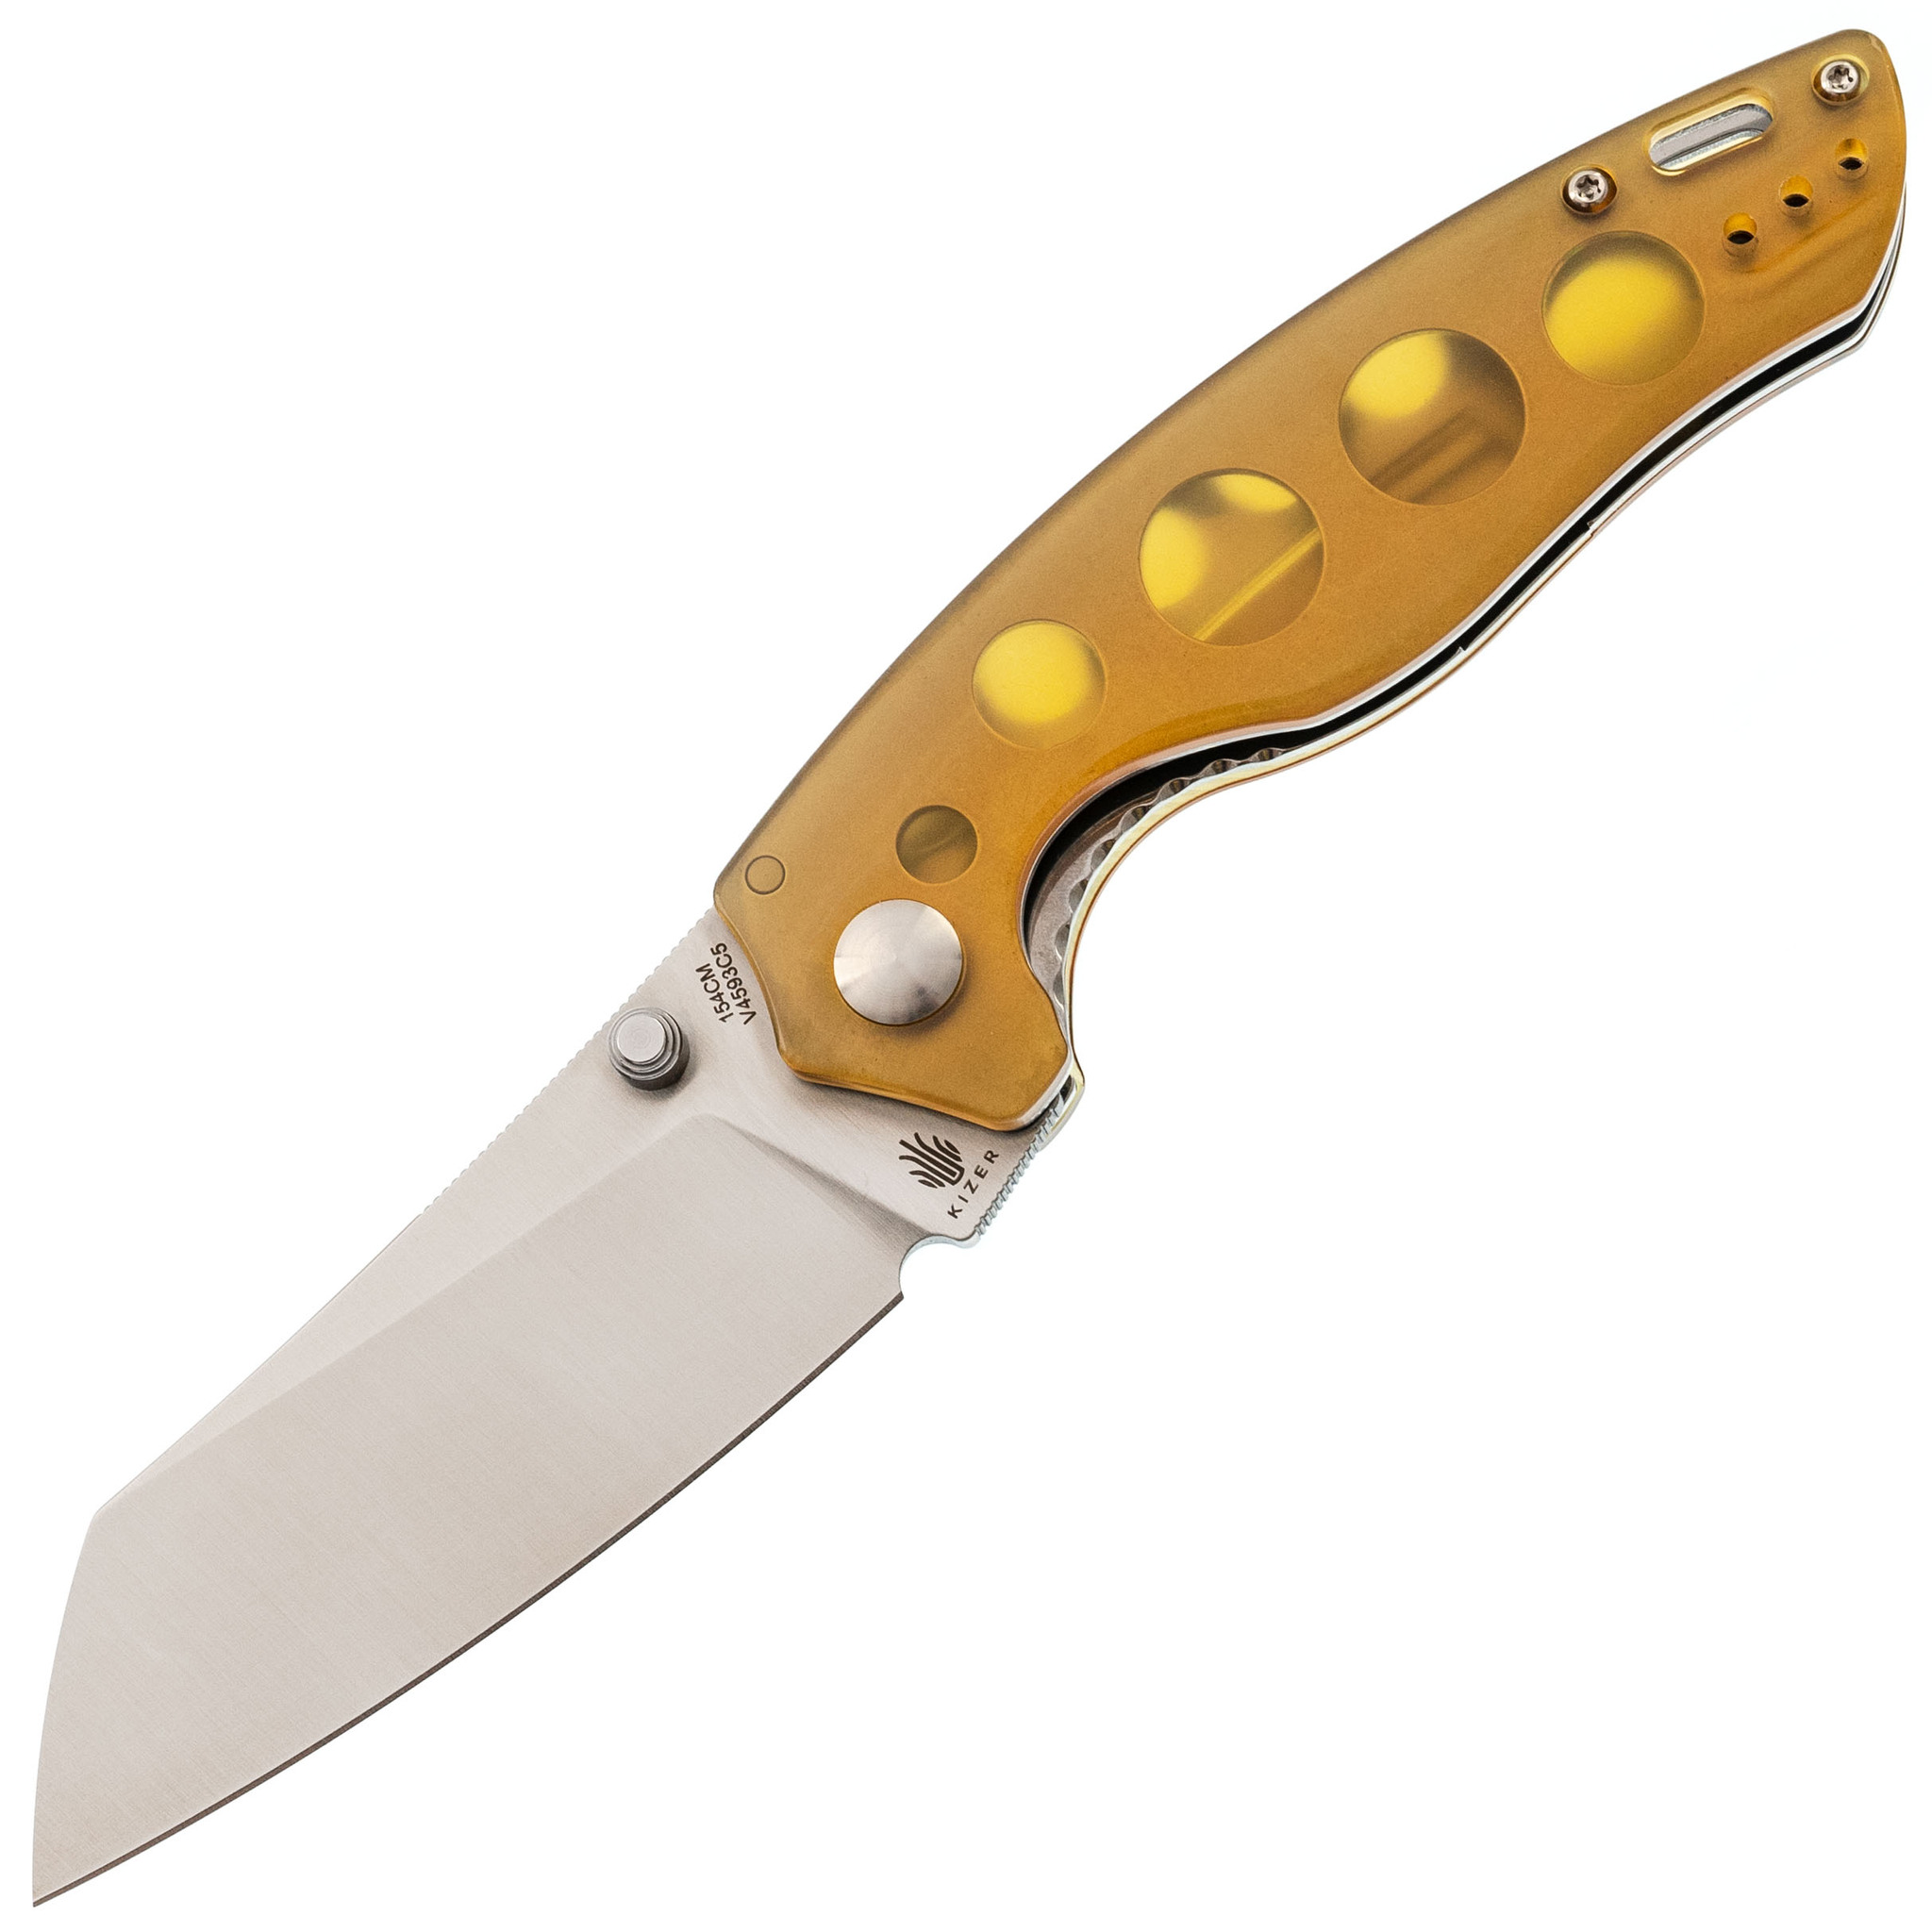 Складной нож Kizer Towser K, сталь 154CM, рукоять PEI, желтый